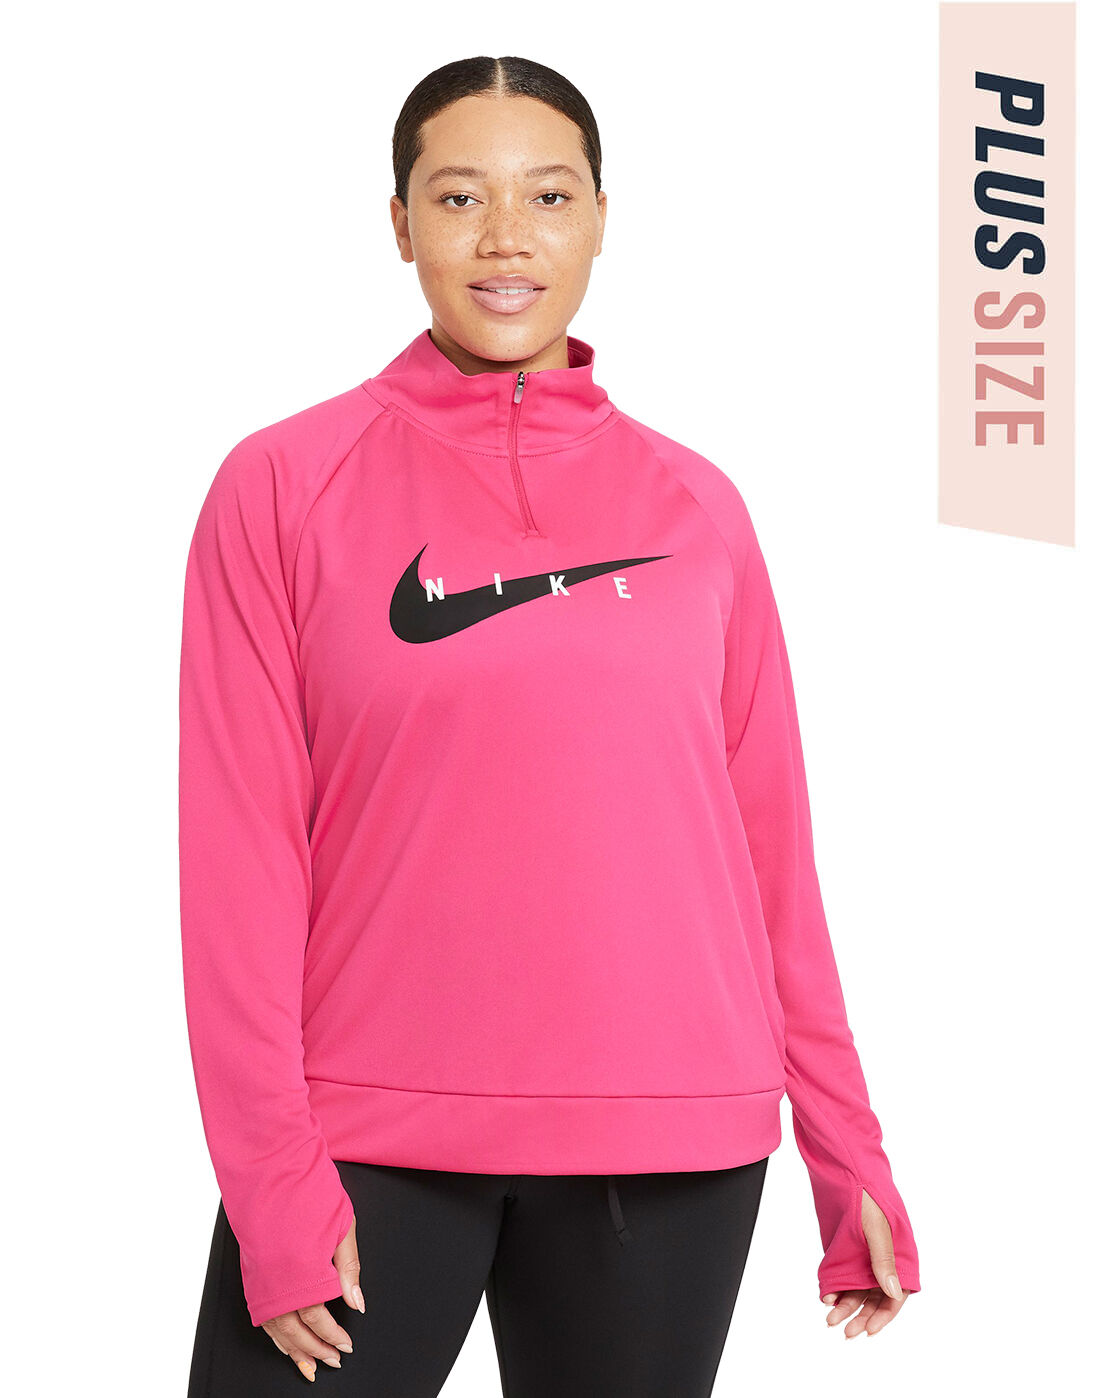 Nike Womens Swoosh Half Zip Plus Top